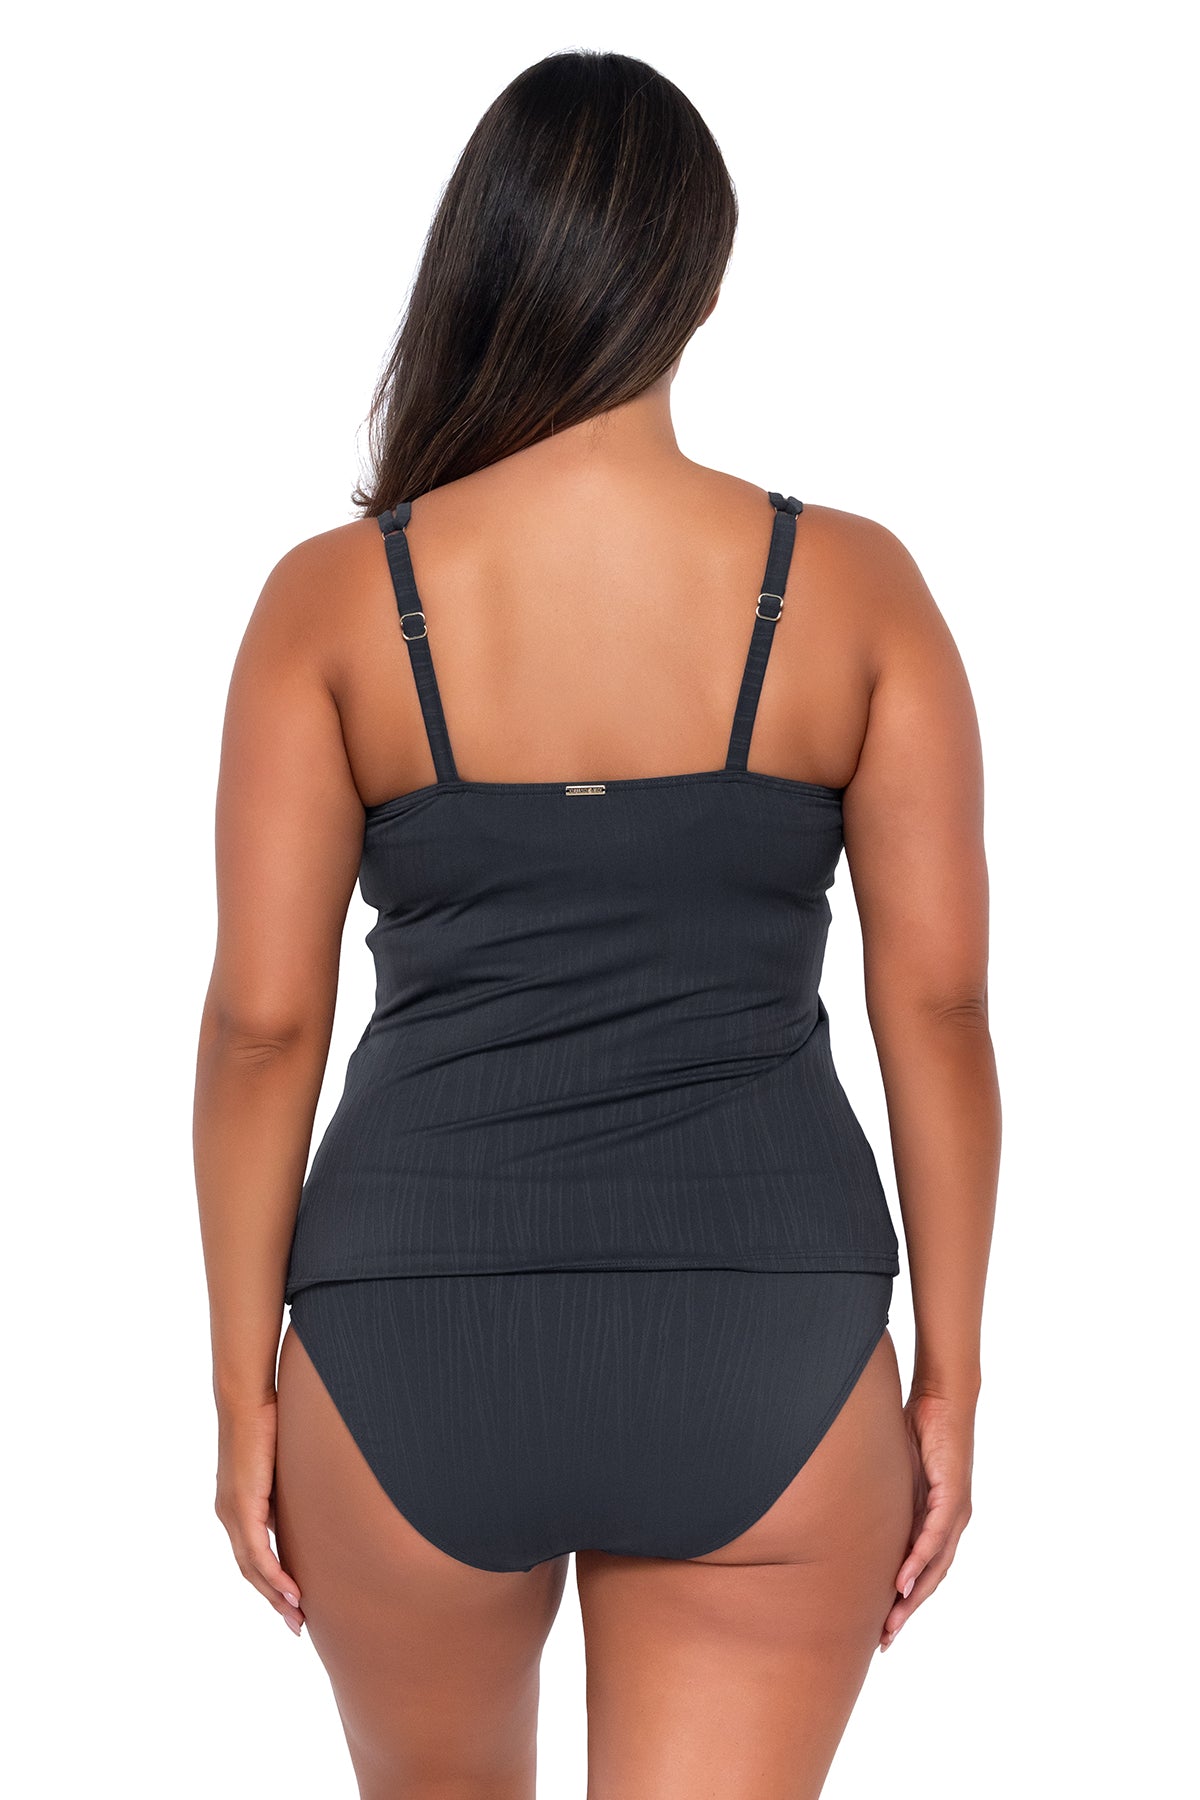 Shop Soft bras Size 33B online